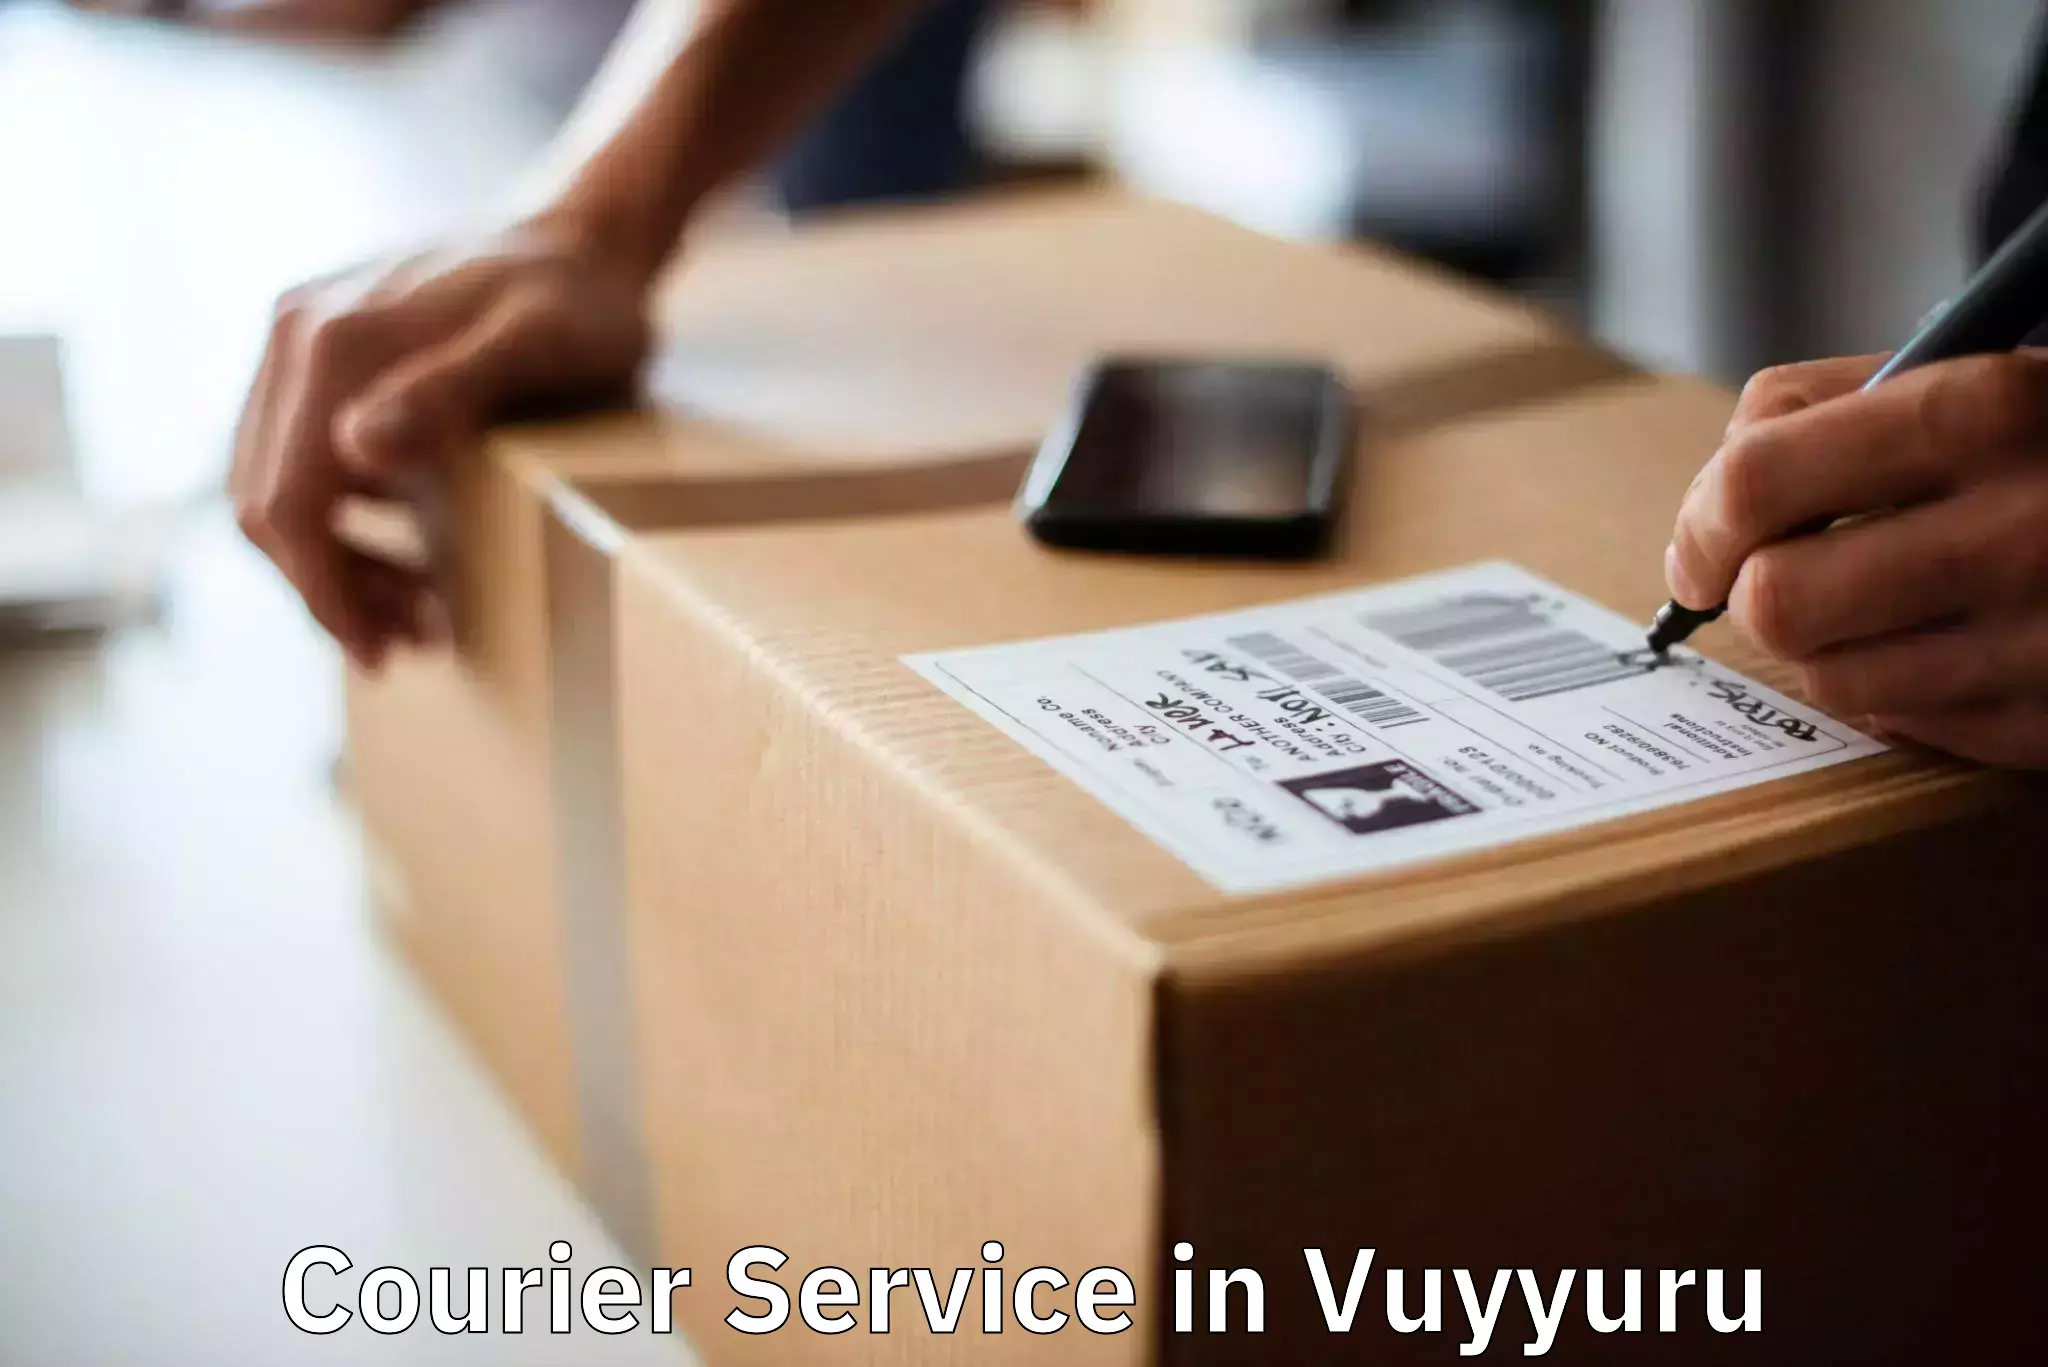 Customized shipping options in Vuyyuru